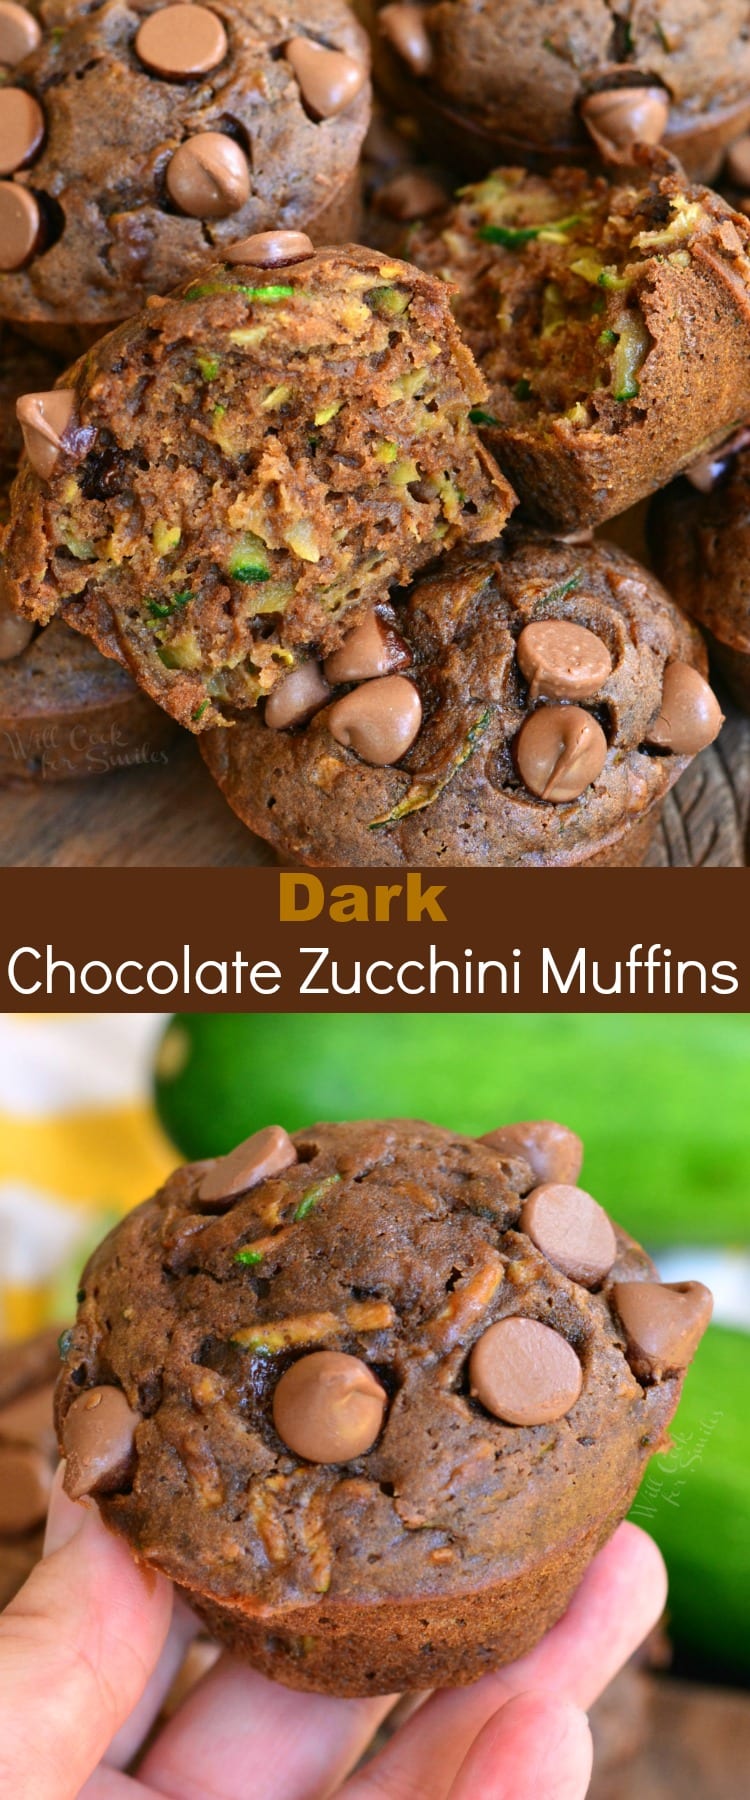 Chocolate Zucchini Muffins collage 